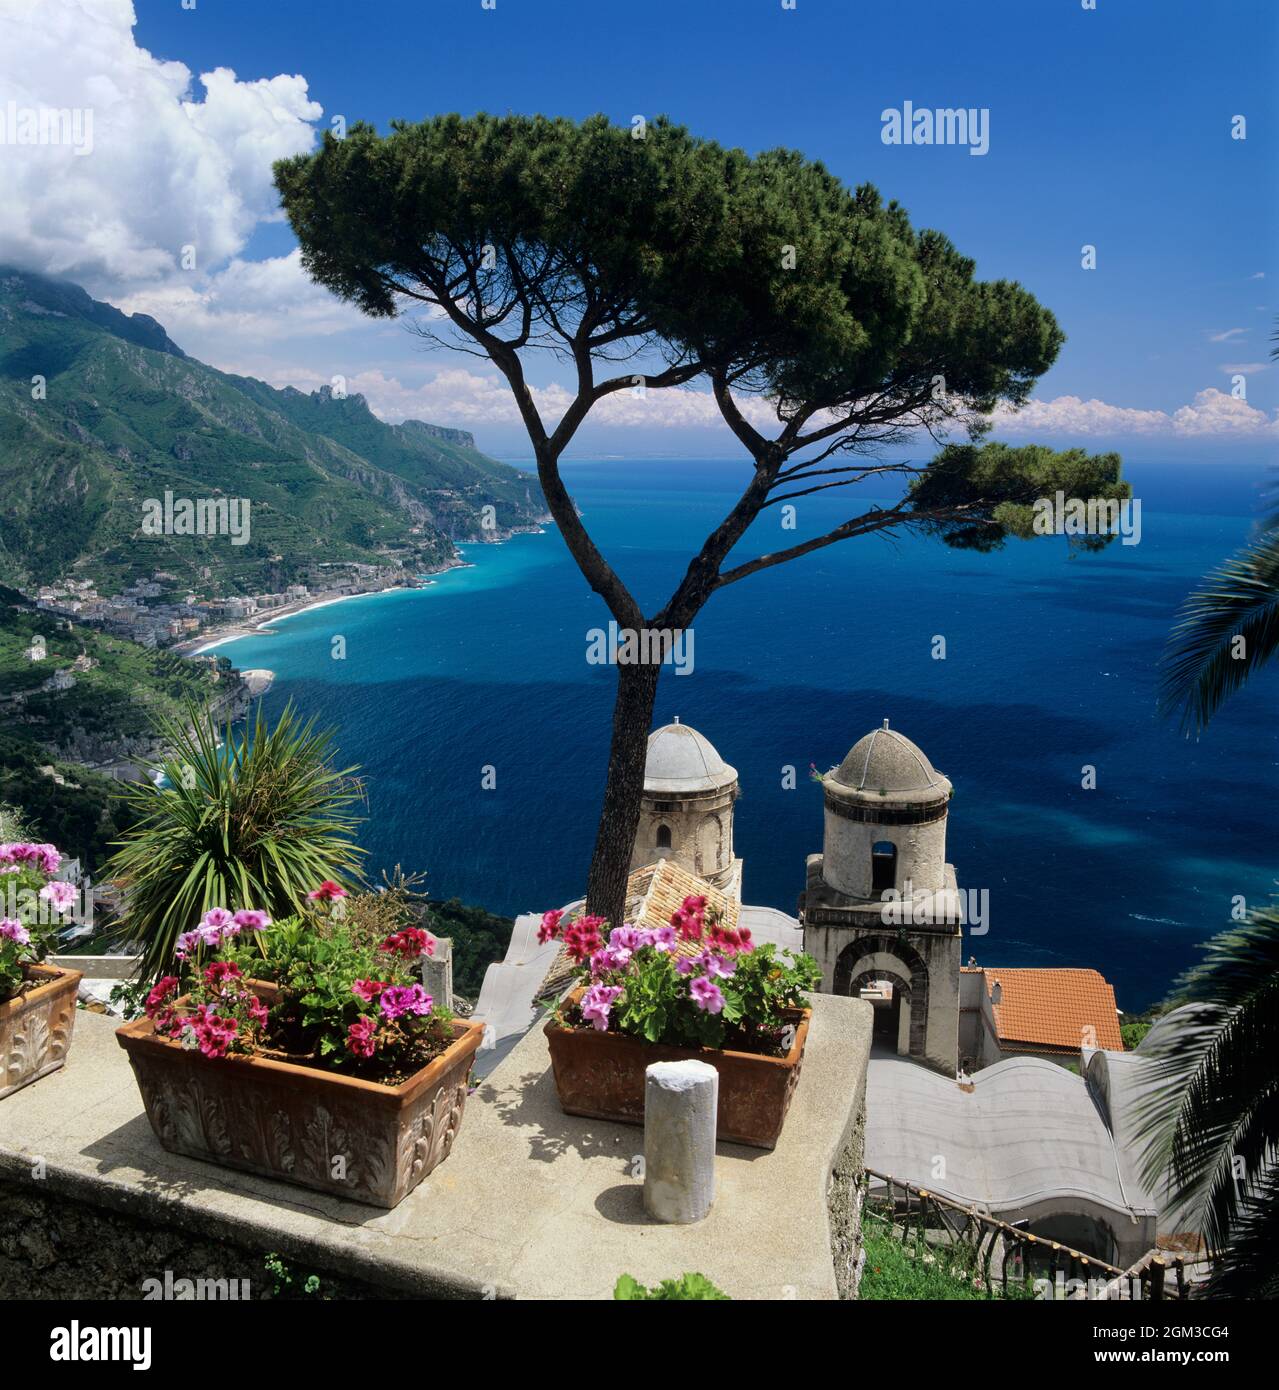 View of Amalfi Coast from the Villa Rufolo Gardens, Ravello, Amalfi Coast, Salerno Province, Campania, Italy, Europe Stock Photo